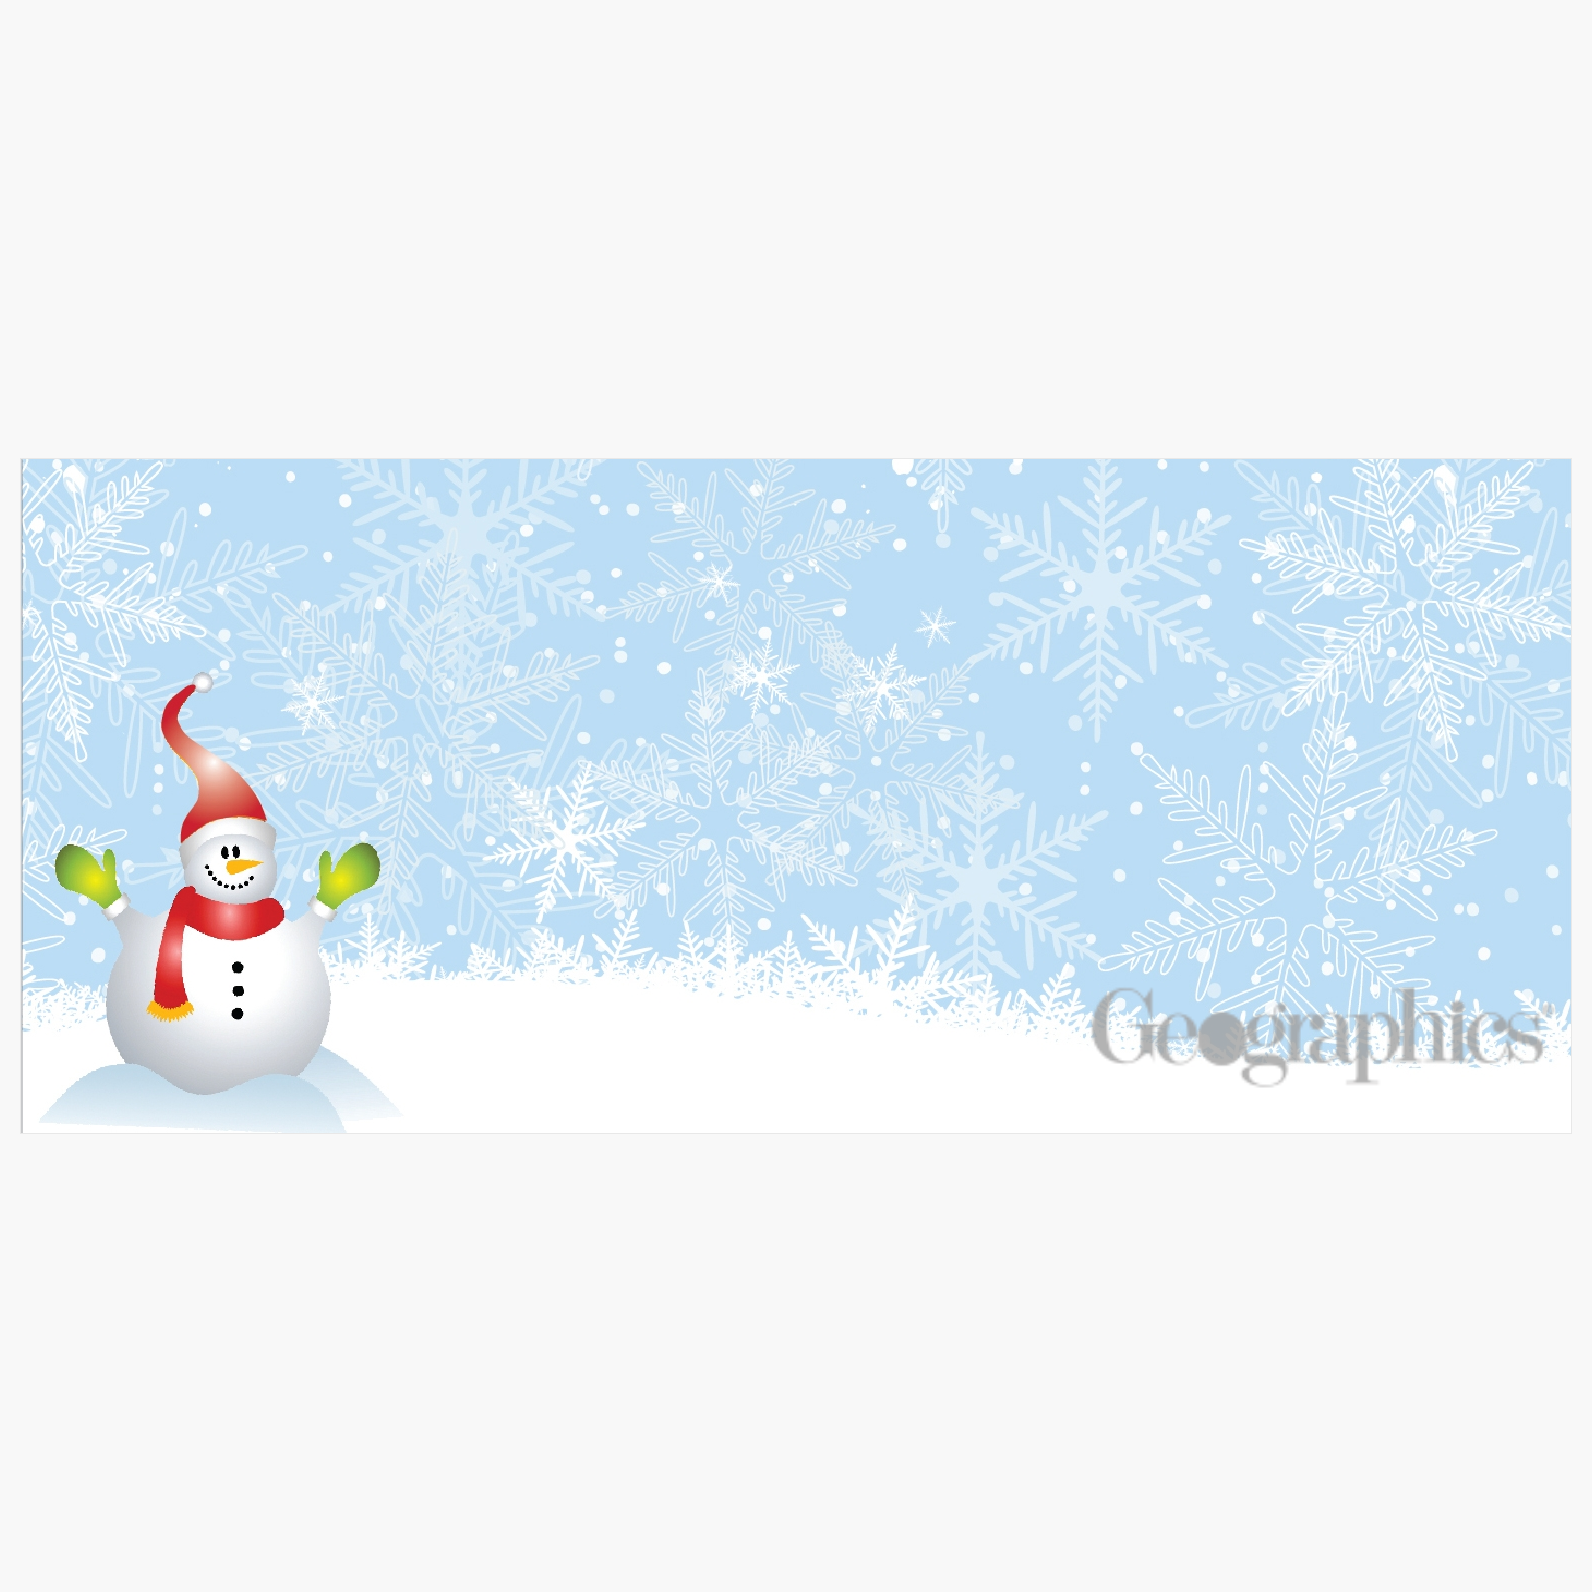 Snowman-Christmas-Envelopes-No-10-Geographics-2-47911W